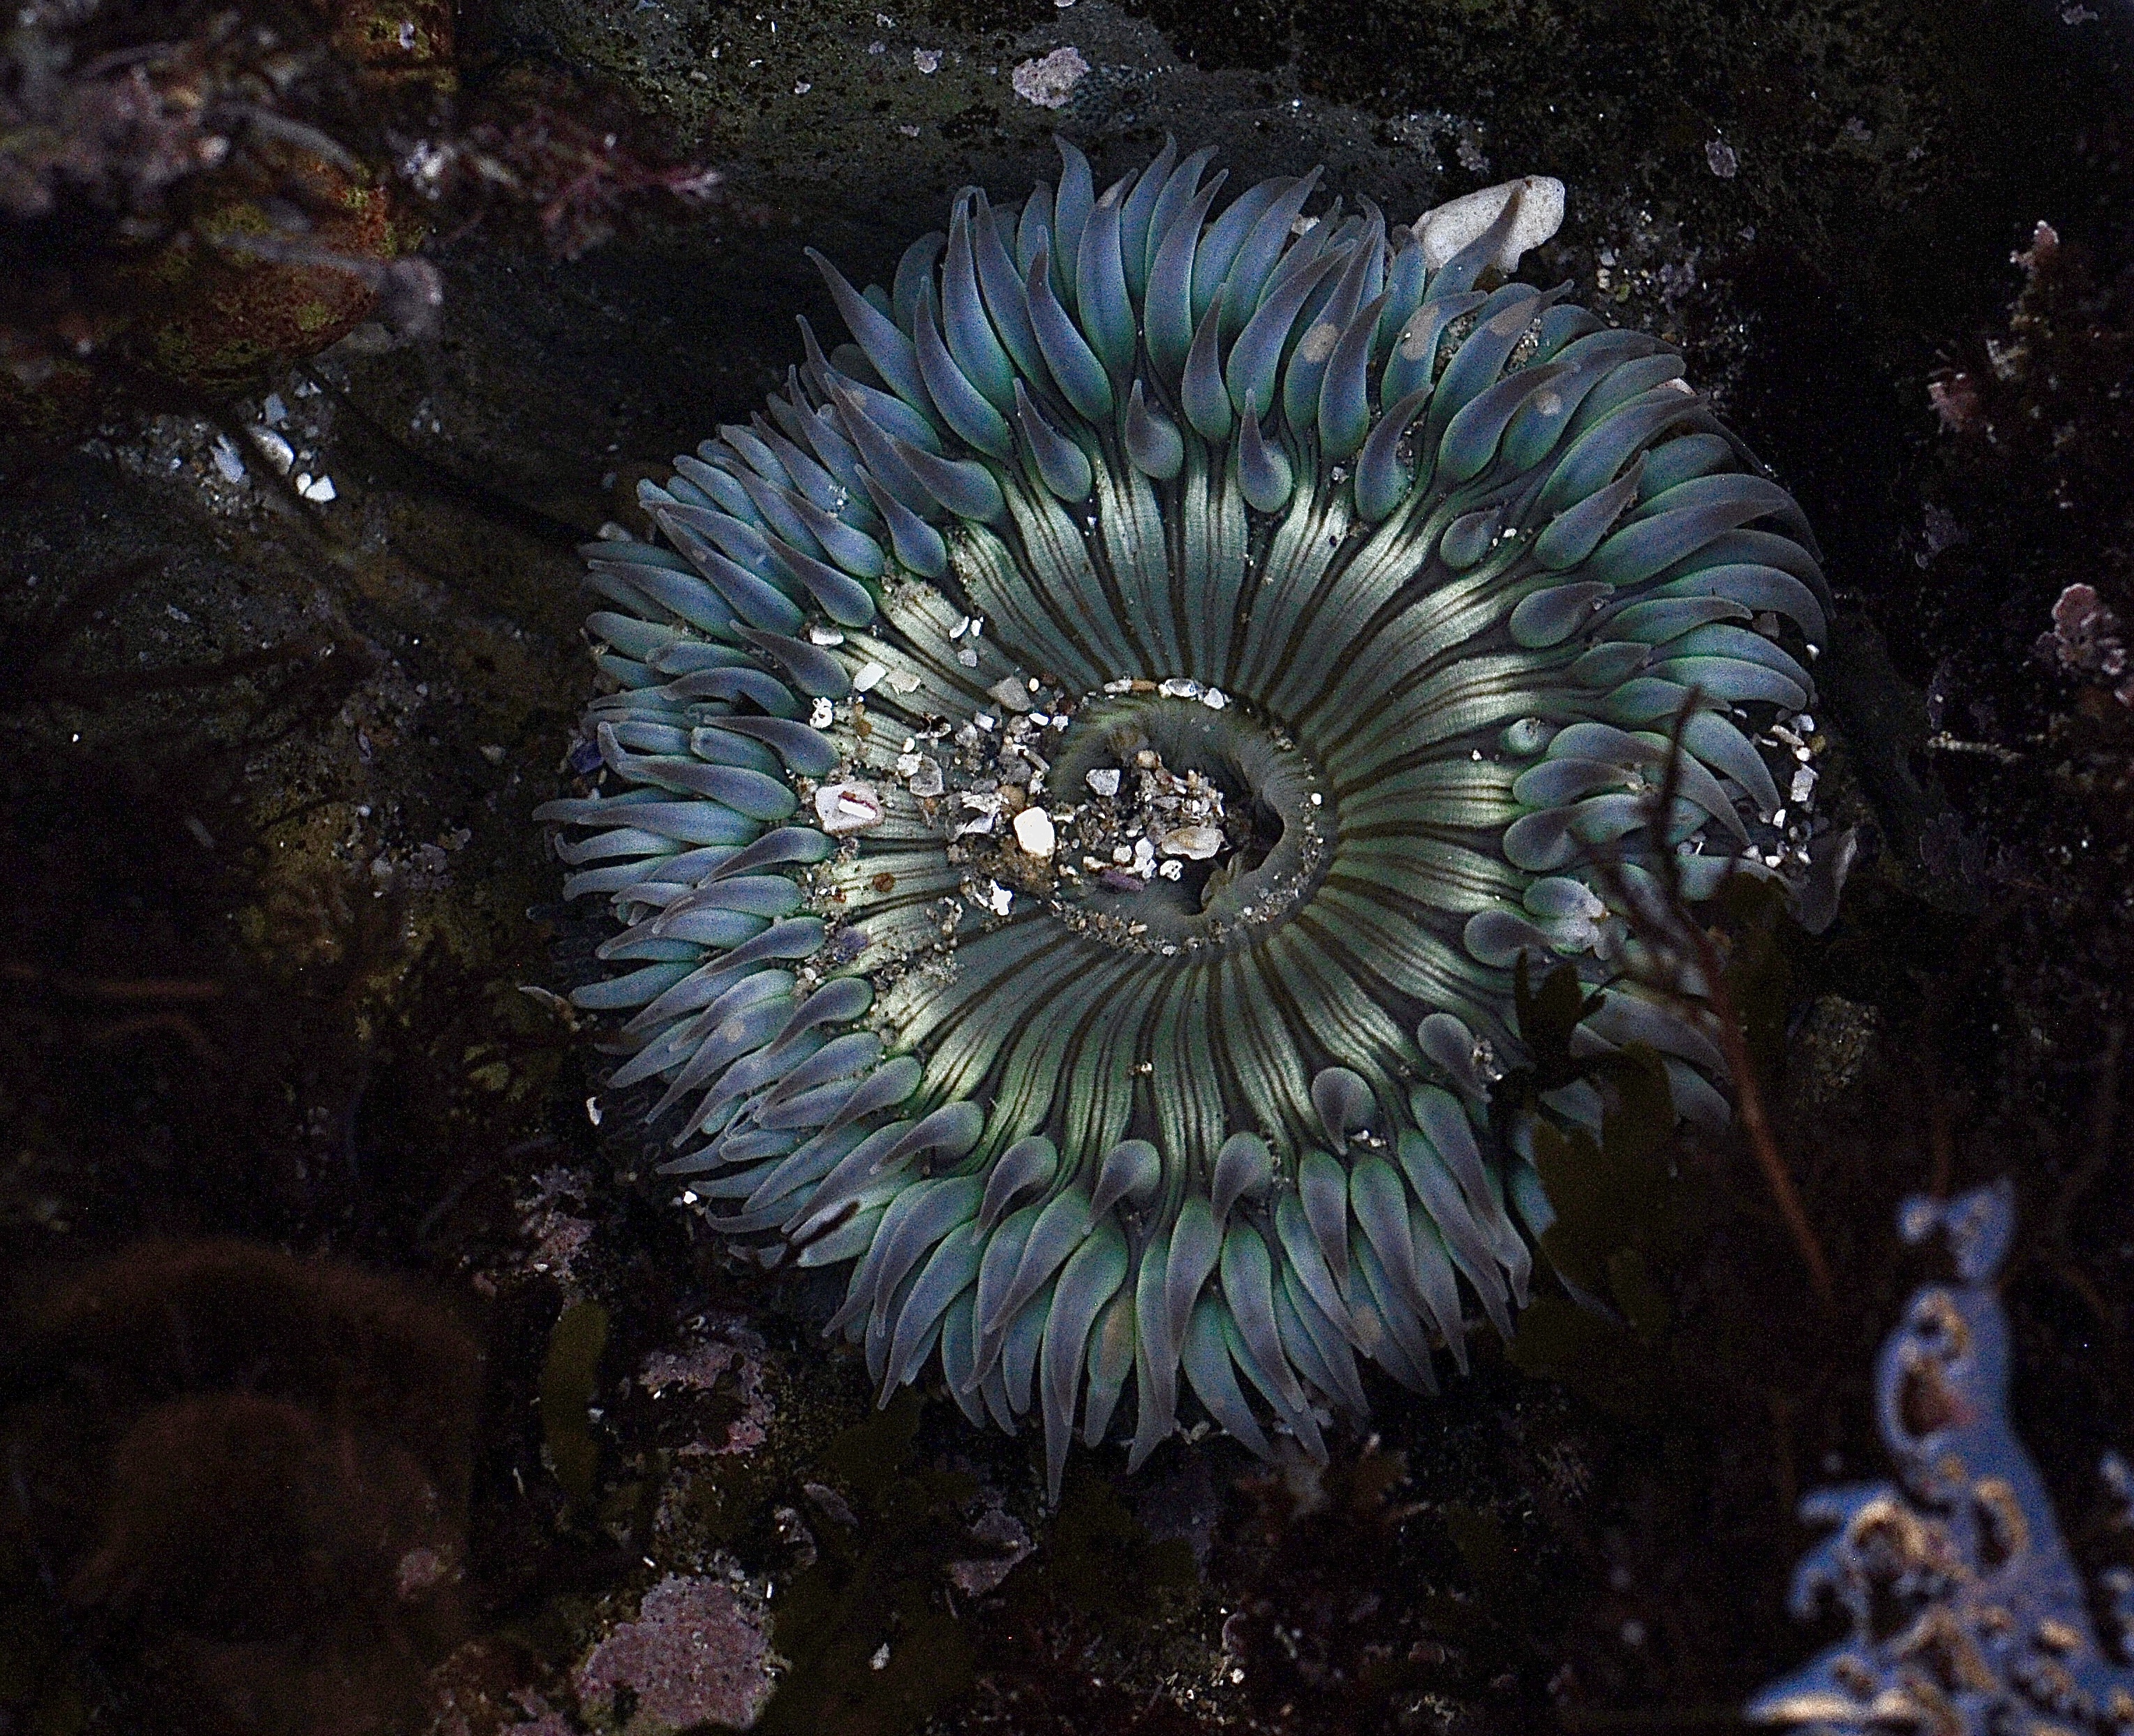 sunburst anemone, california tide pools, tentacles, what do anemones eat?